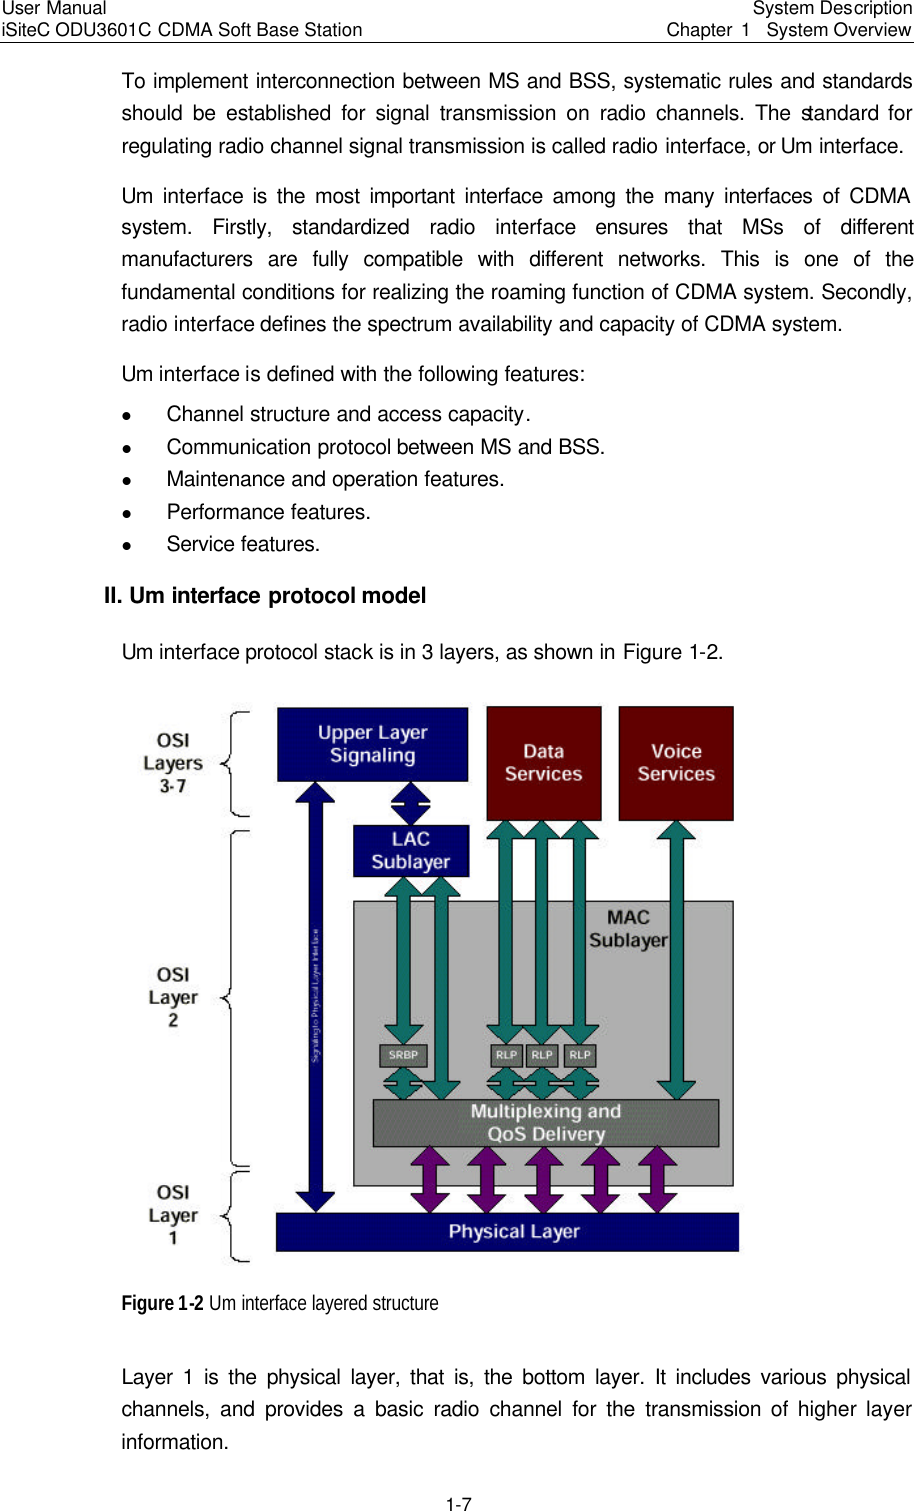 Page 10 of Huawei Technologies ODU3601C-800 CDMA Base Station User Manual 2